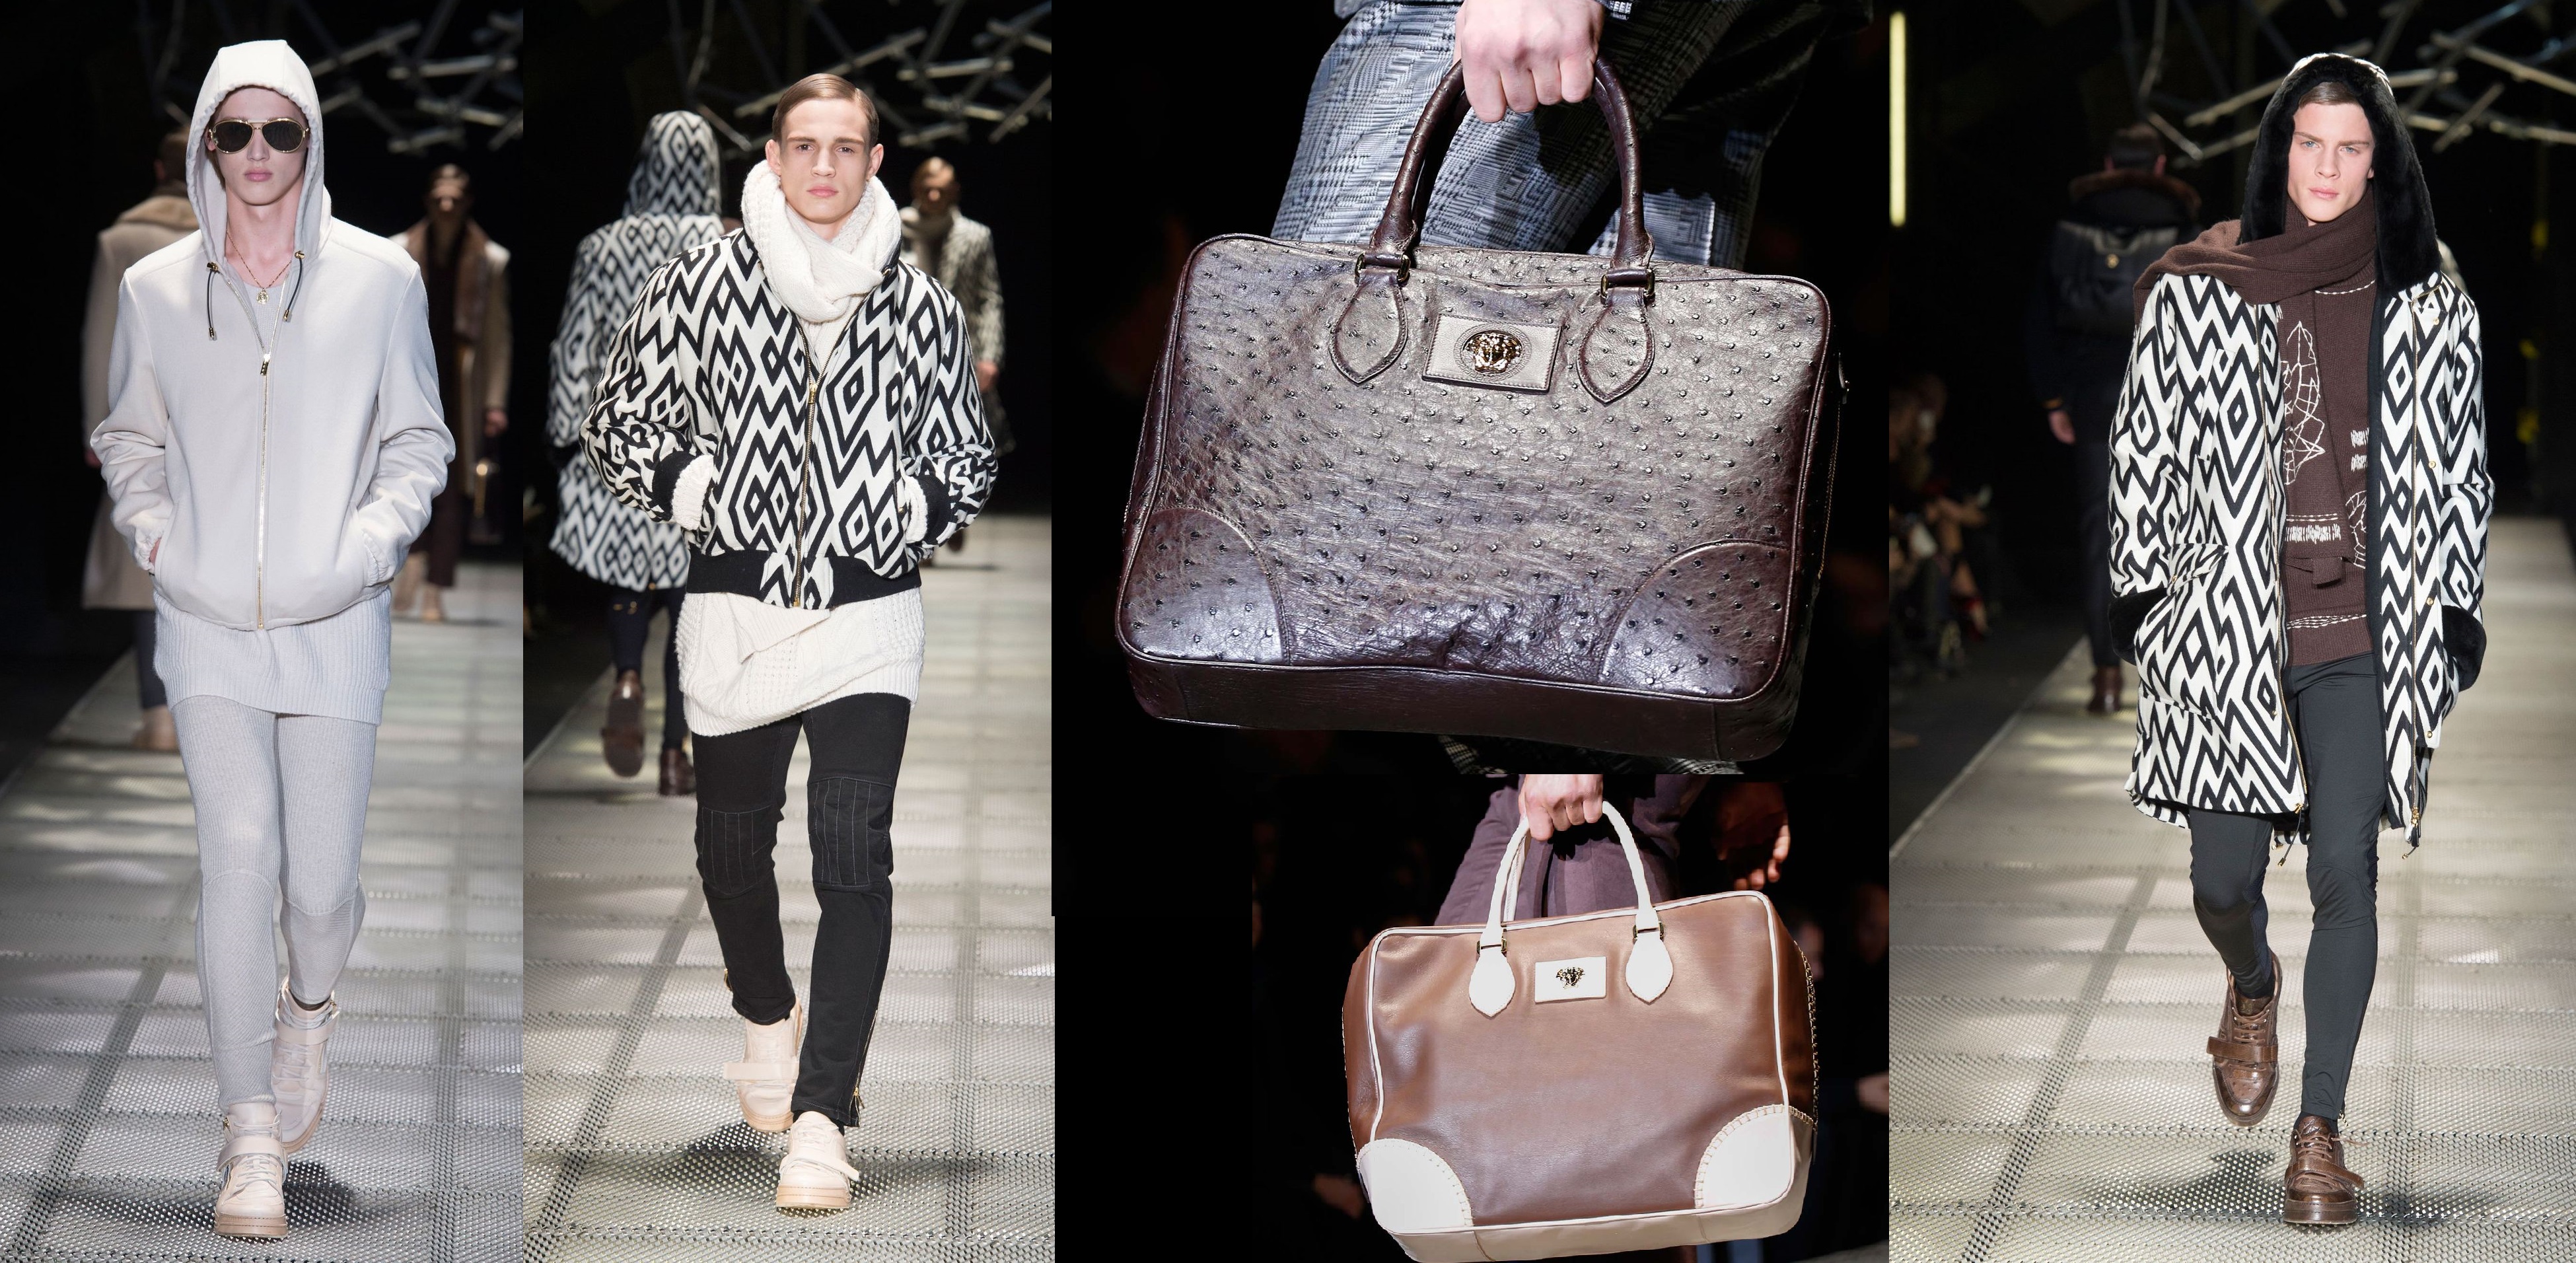 Milan, menswear, trends, personal shopper, image consultant, silk gift milan, man, style, fashion, shopping, trendy